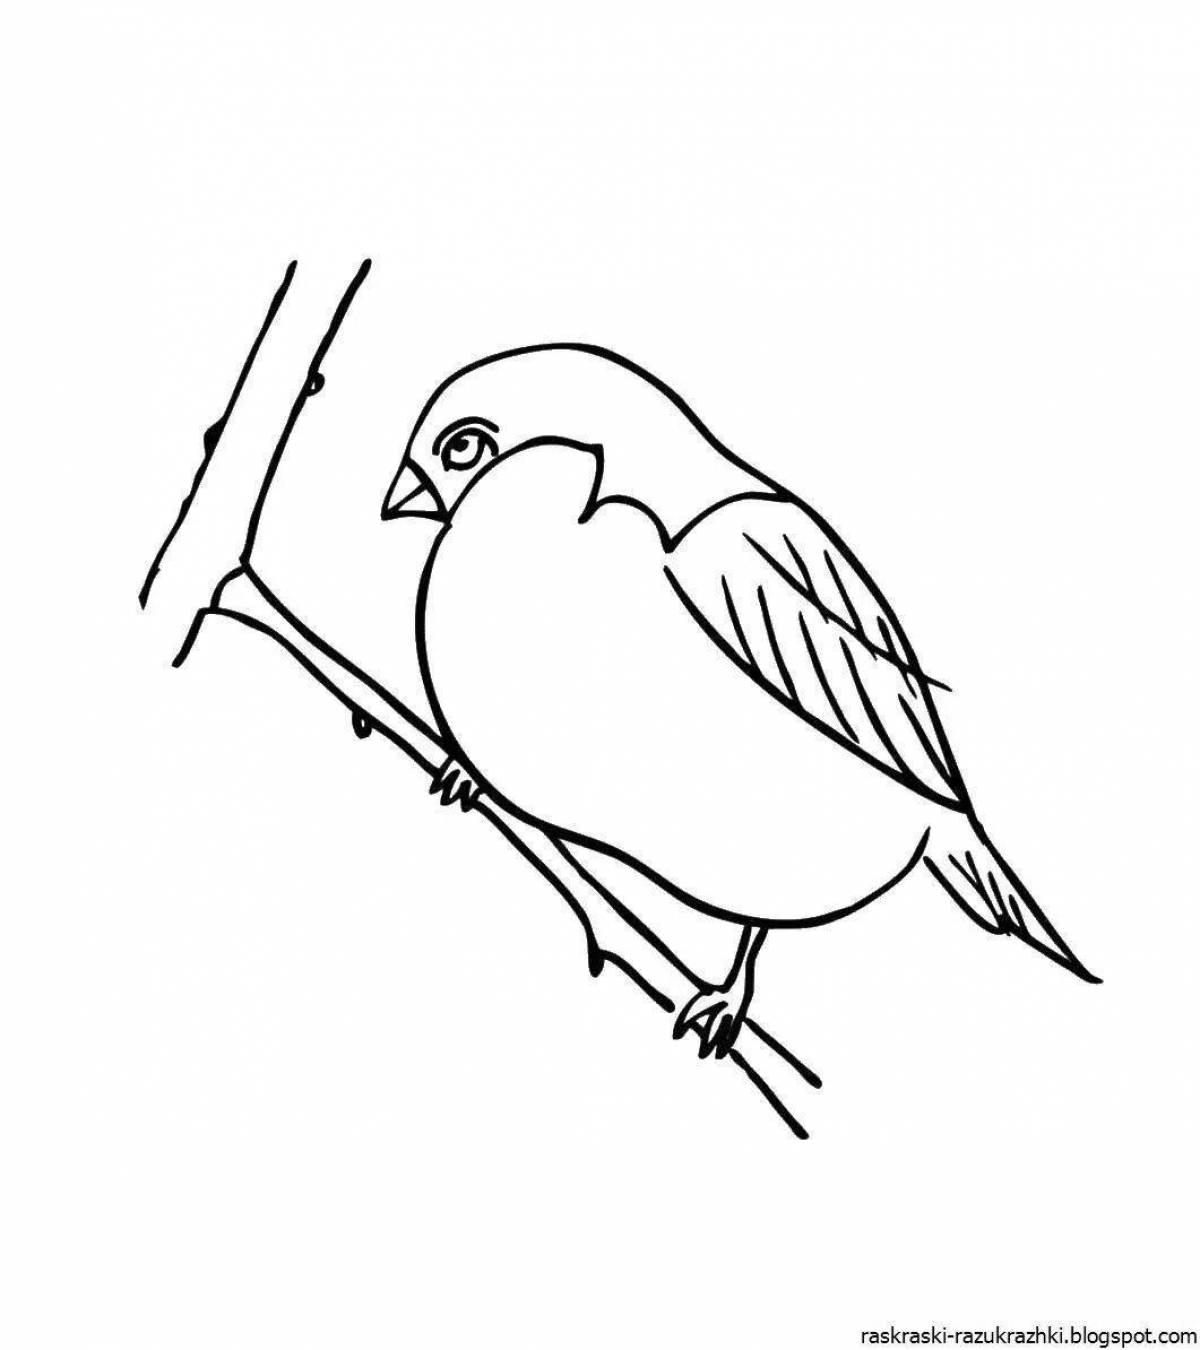 Radiant bullfinch on a branch drawing